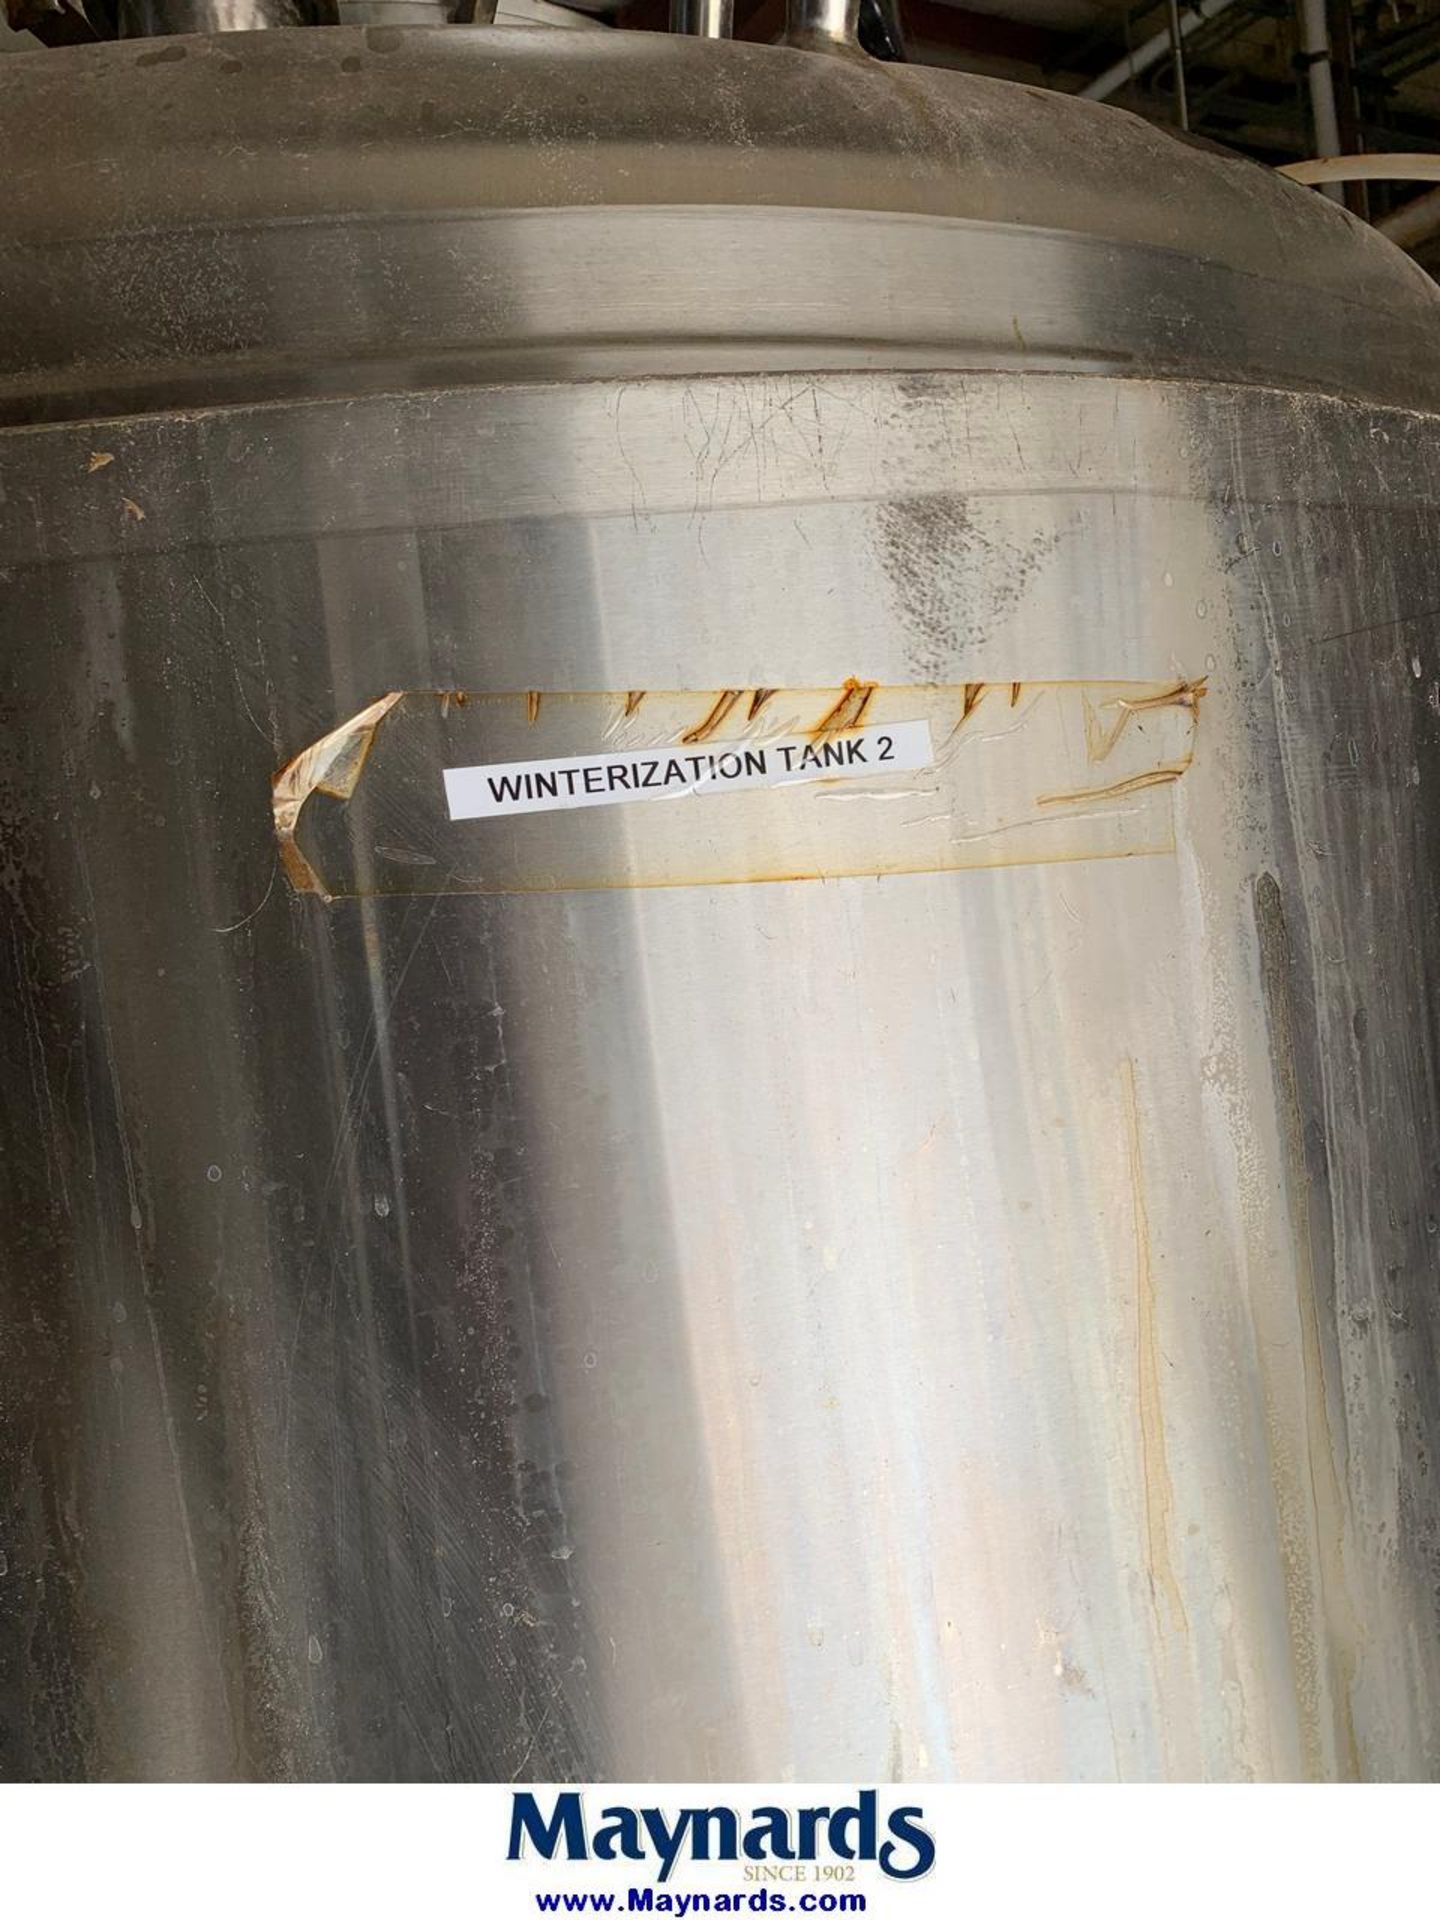 2008 Mueller 500 Gallon Stainless Steel Winterization Tank - Image 4 of 4